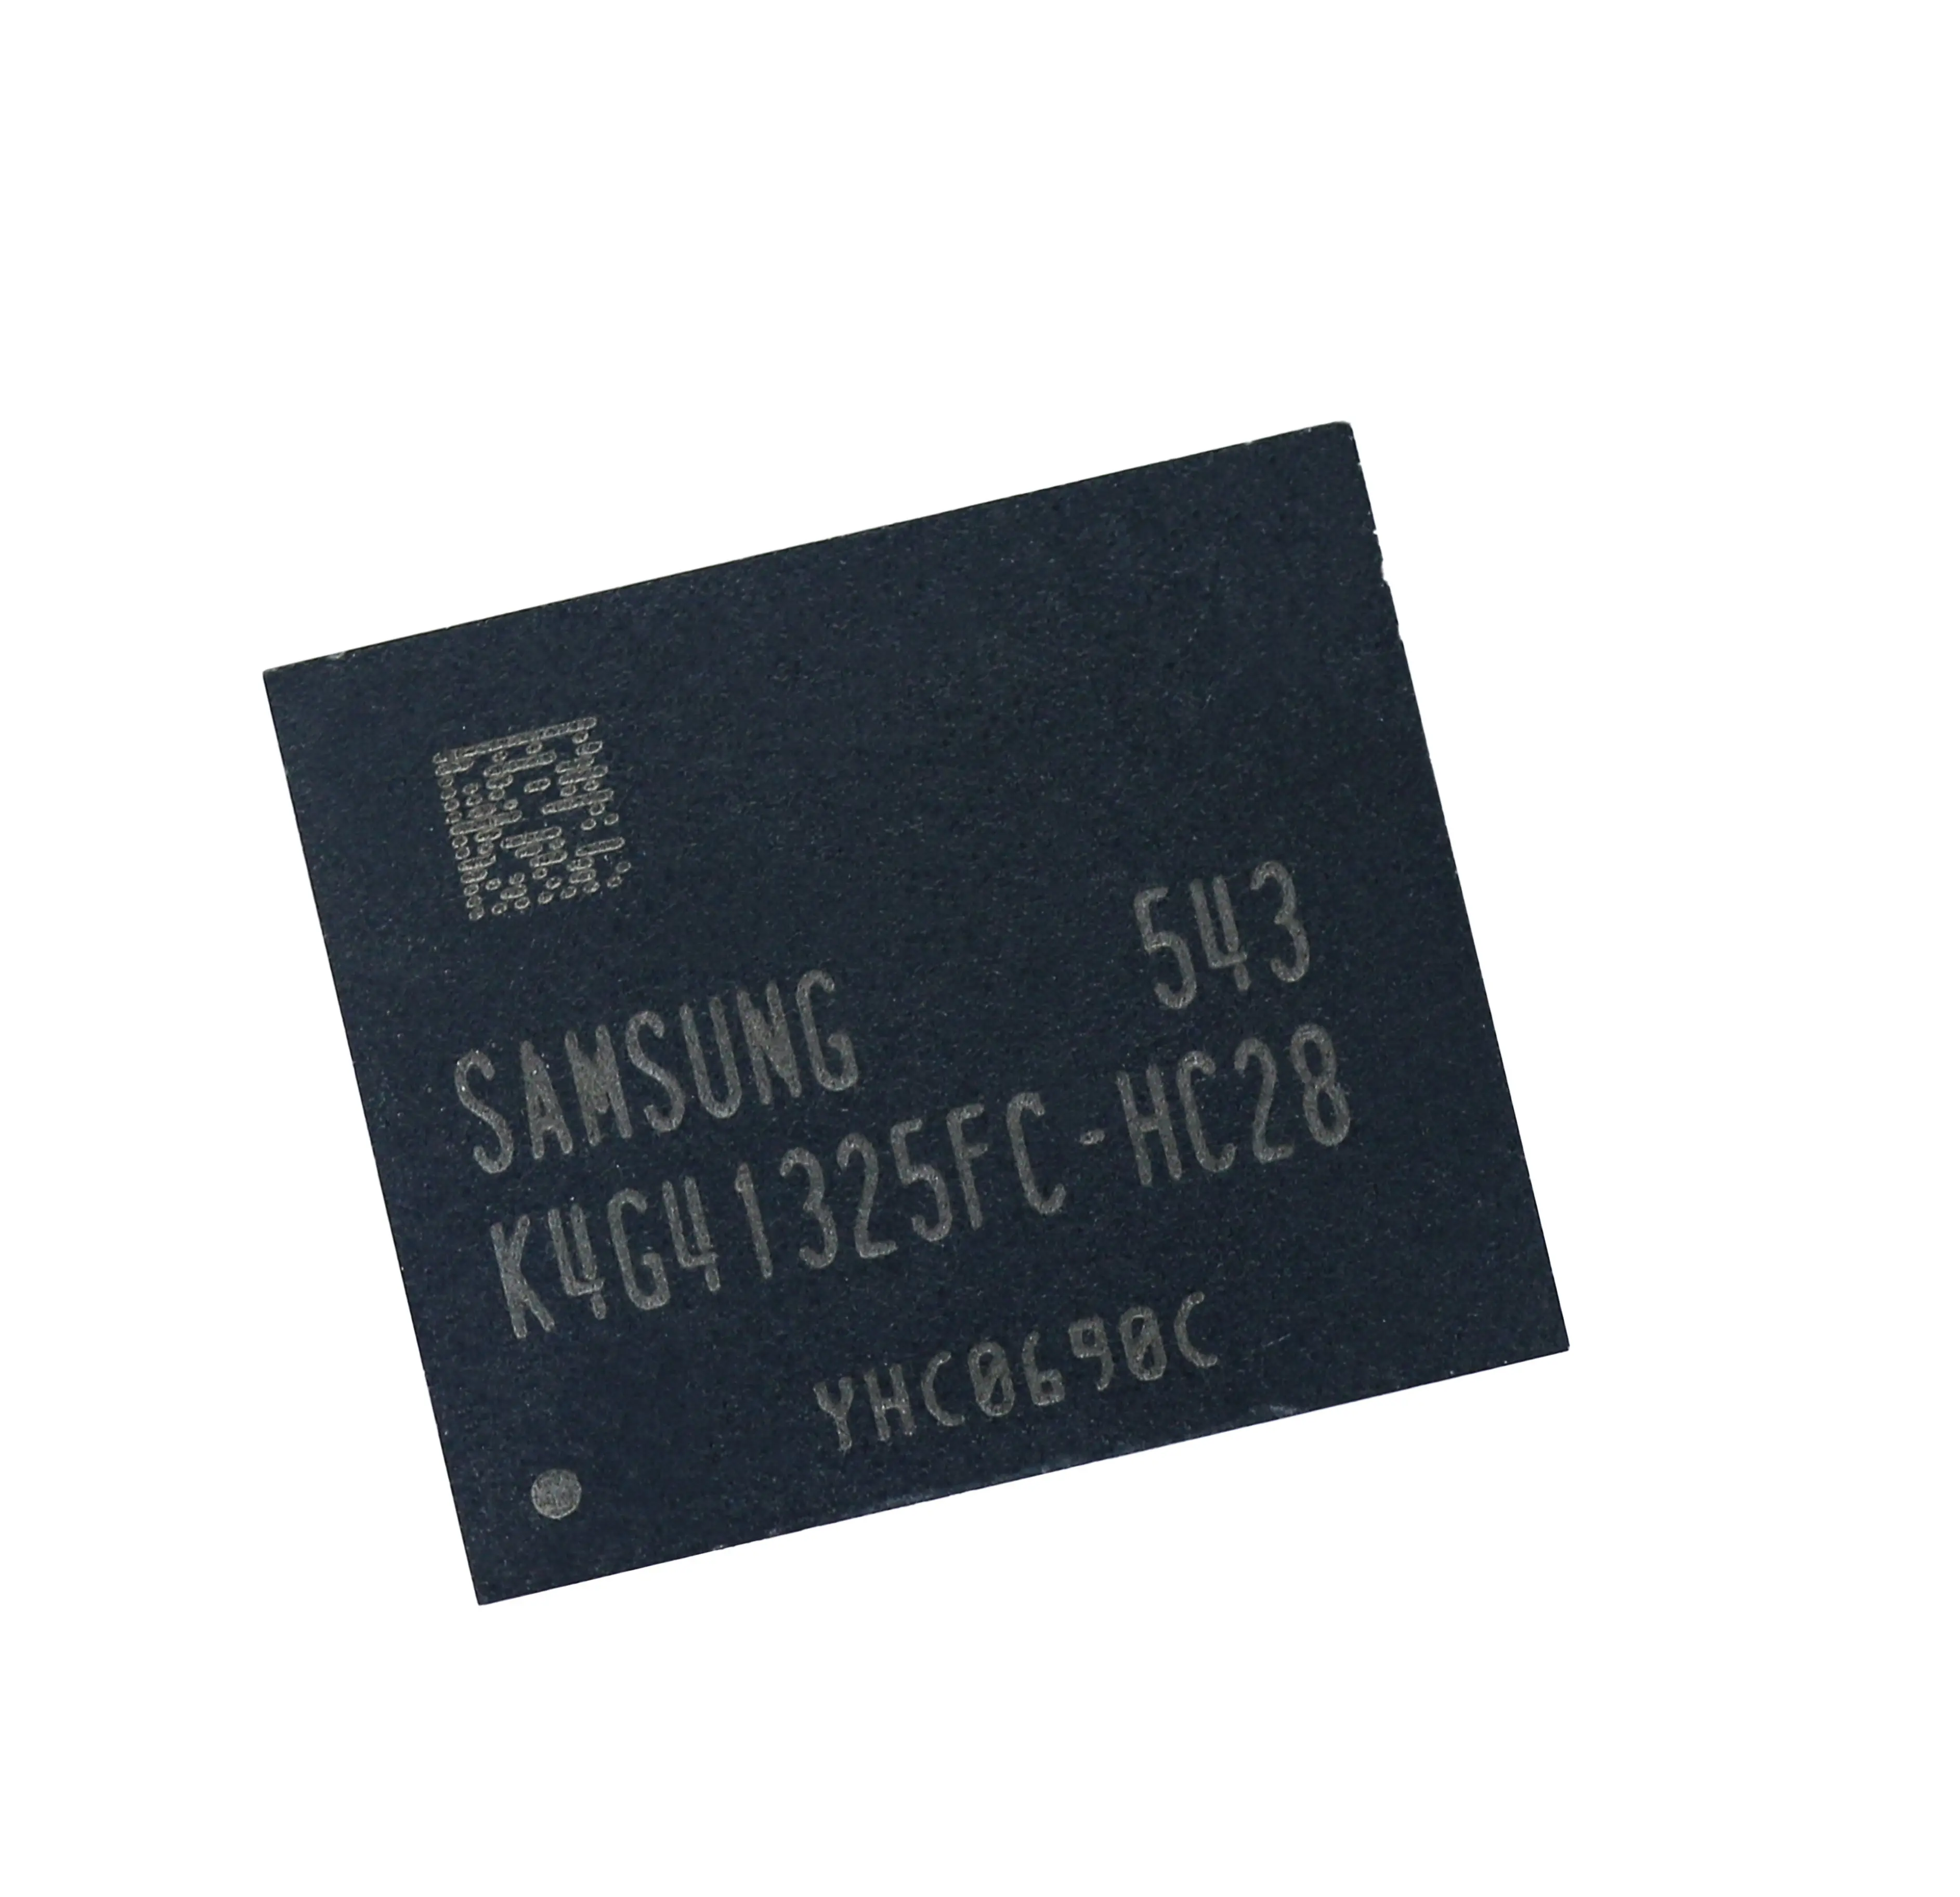 Chip Ic Package Bga gddr5 bga vram chip K4G41325FC-HC28 NAND flash memory IC chip K4G41325FC-HC28